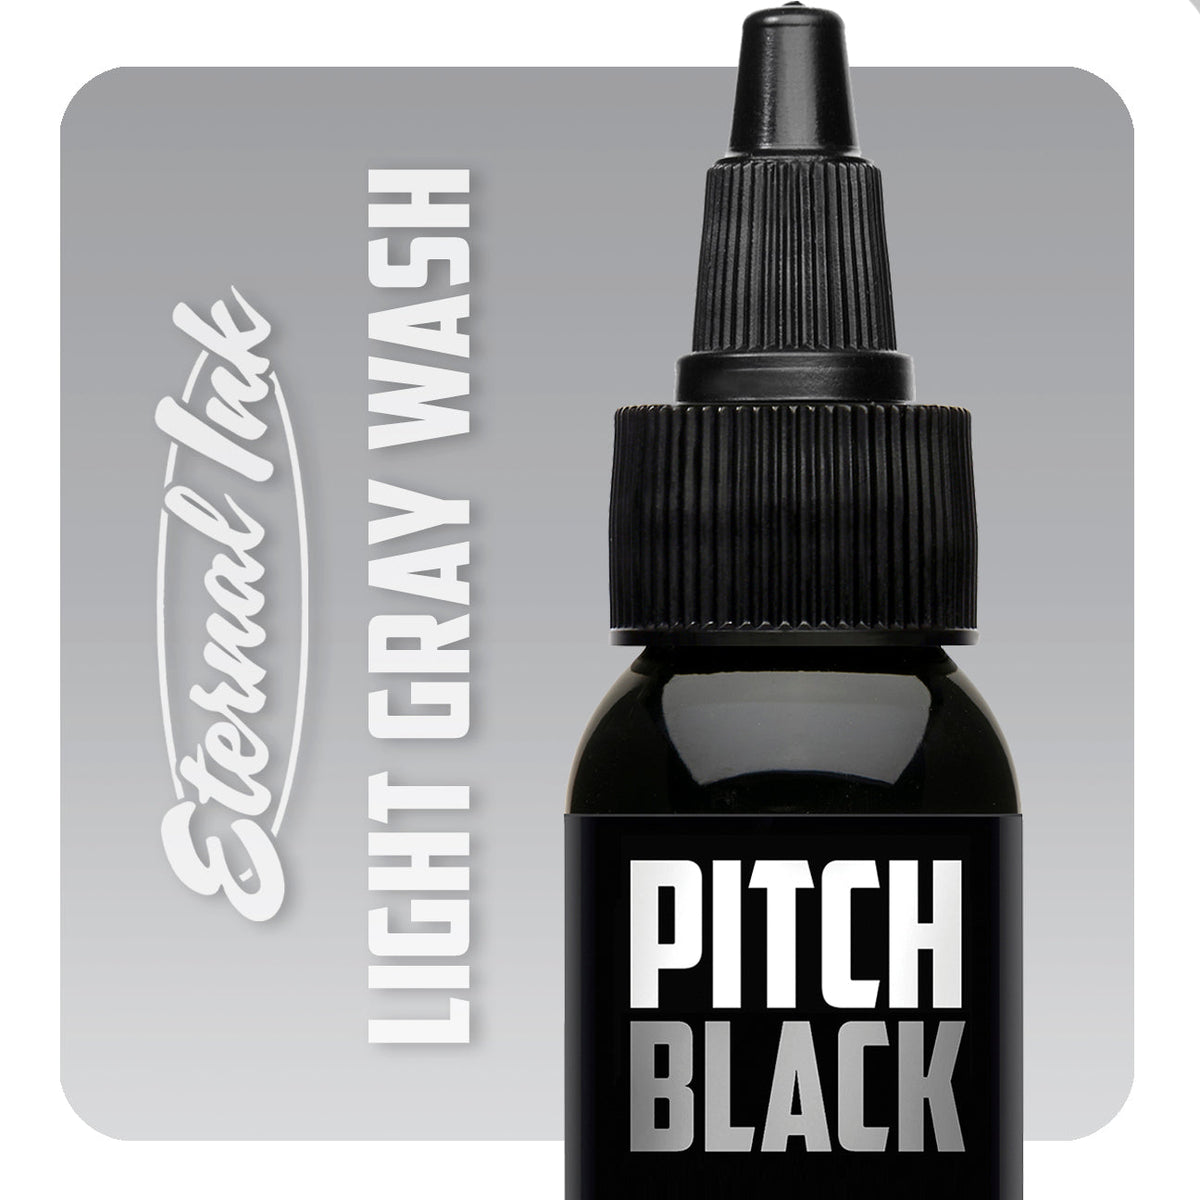 Pitch Black Light Gray Wash